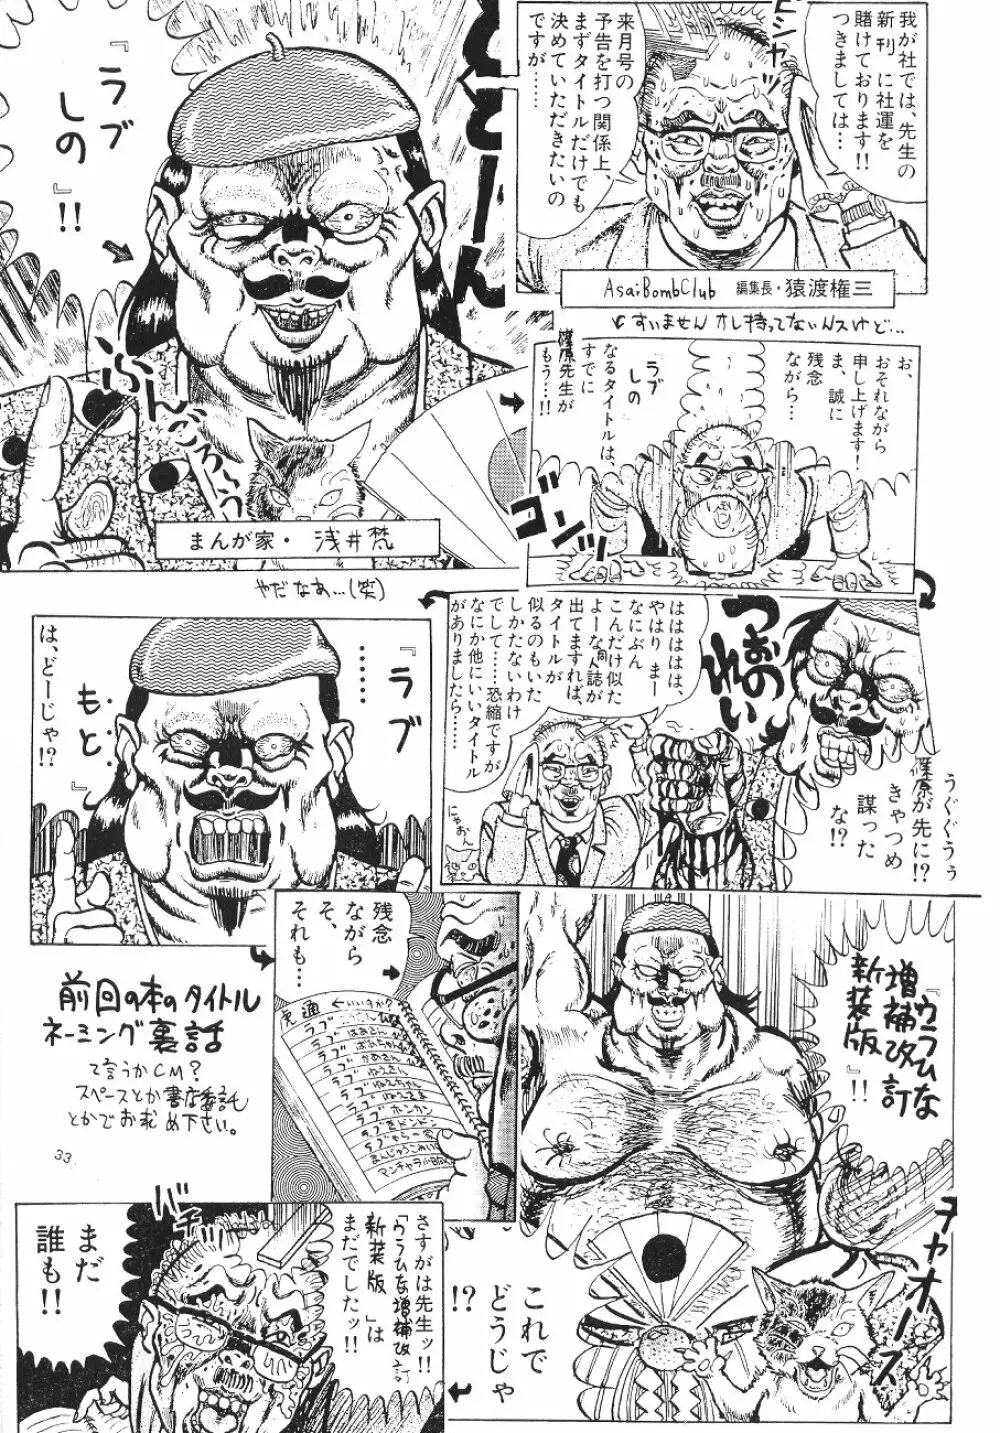 Asai Bomb Club - Love Machine Page.34